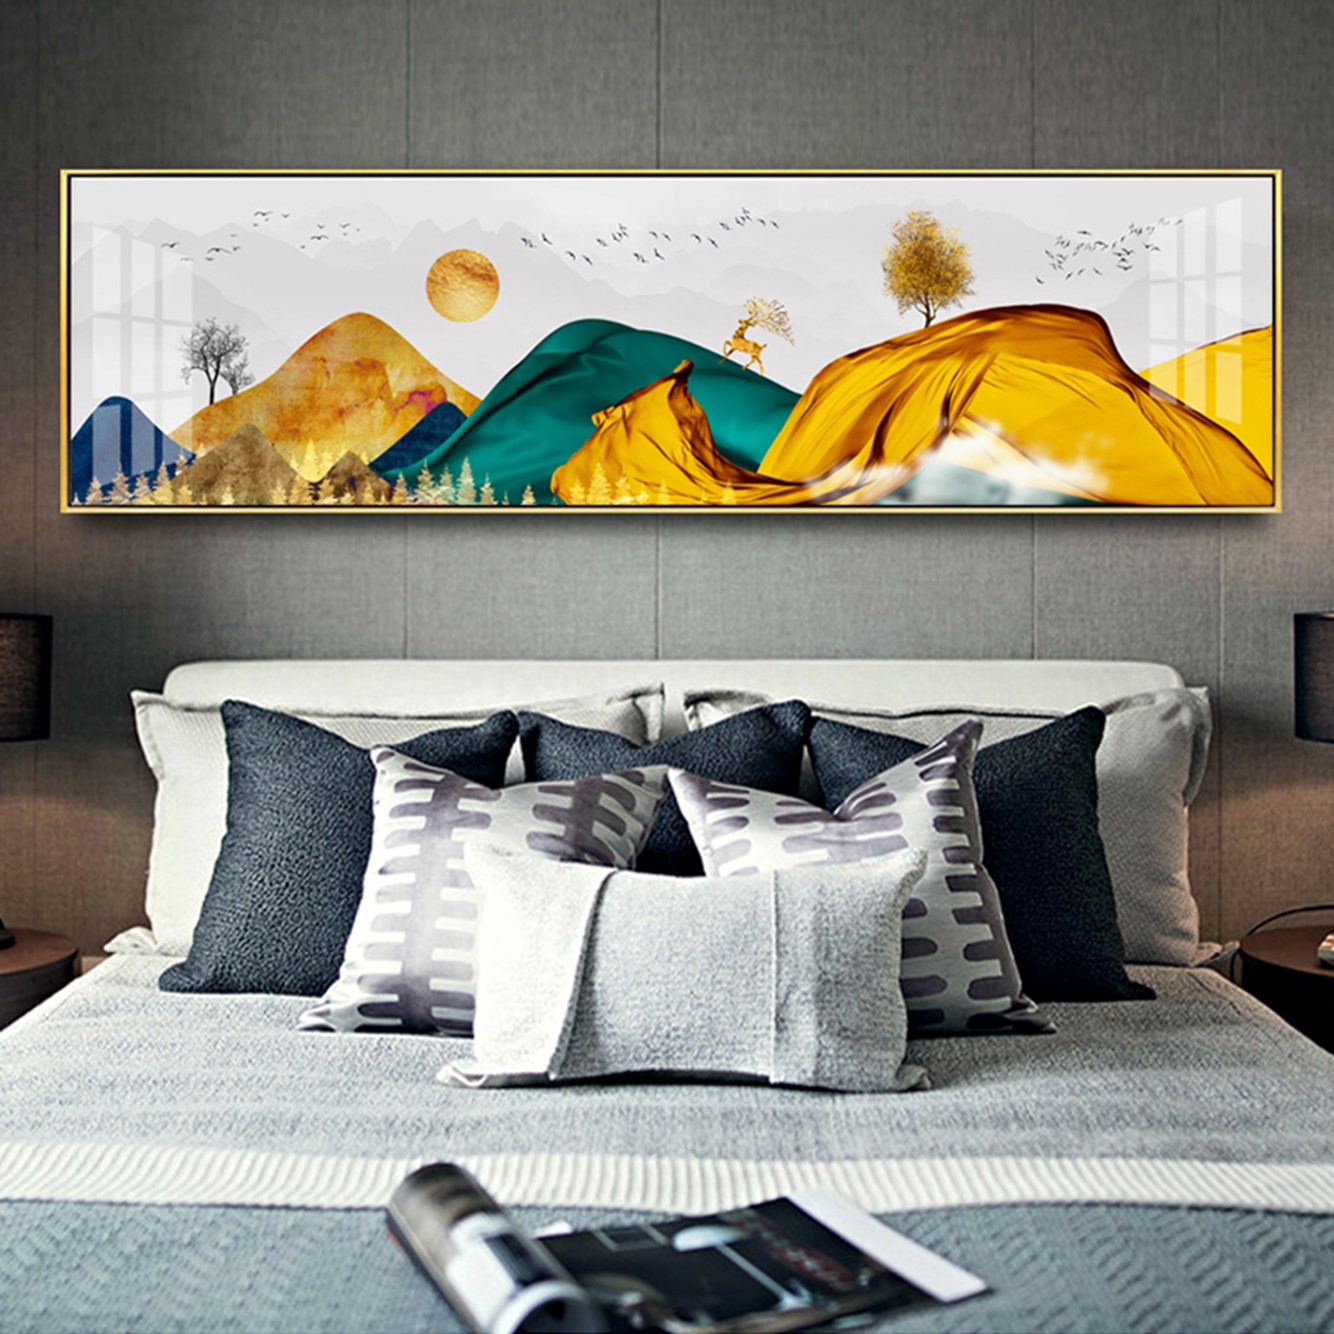 s北欧现代新中式床头金山麋鹿 客厅卧室餐厅三联高清装饰画芯素材打印图片H11554